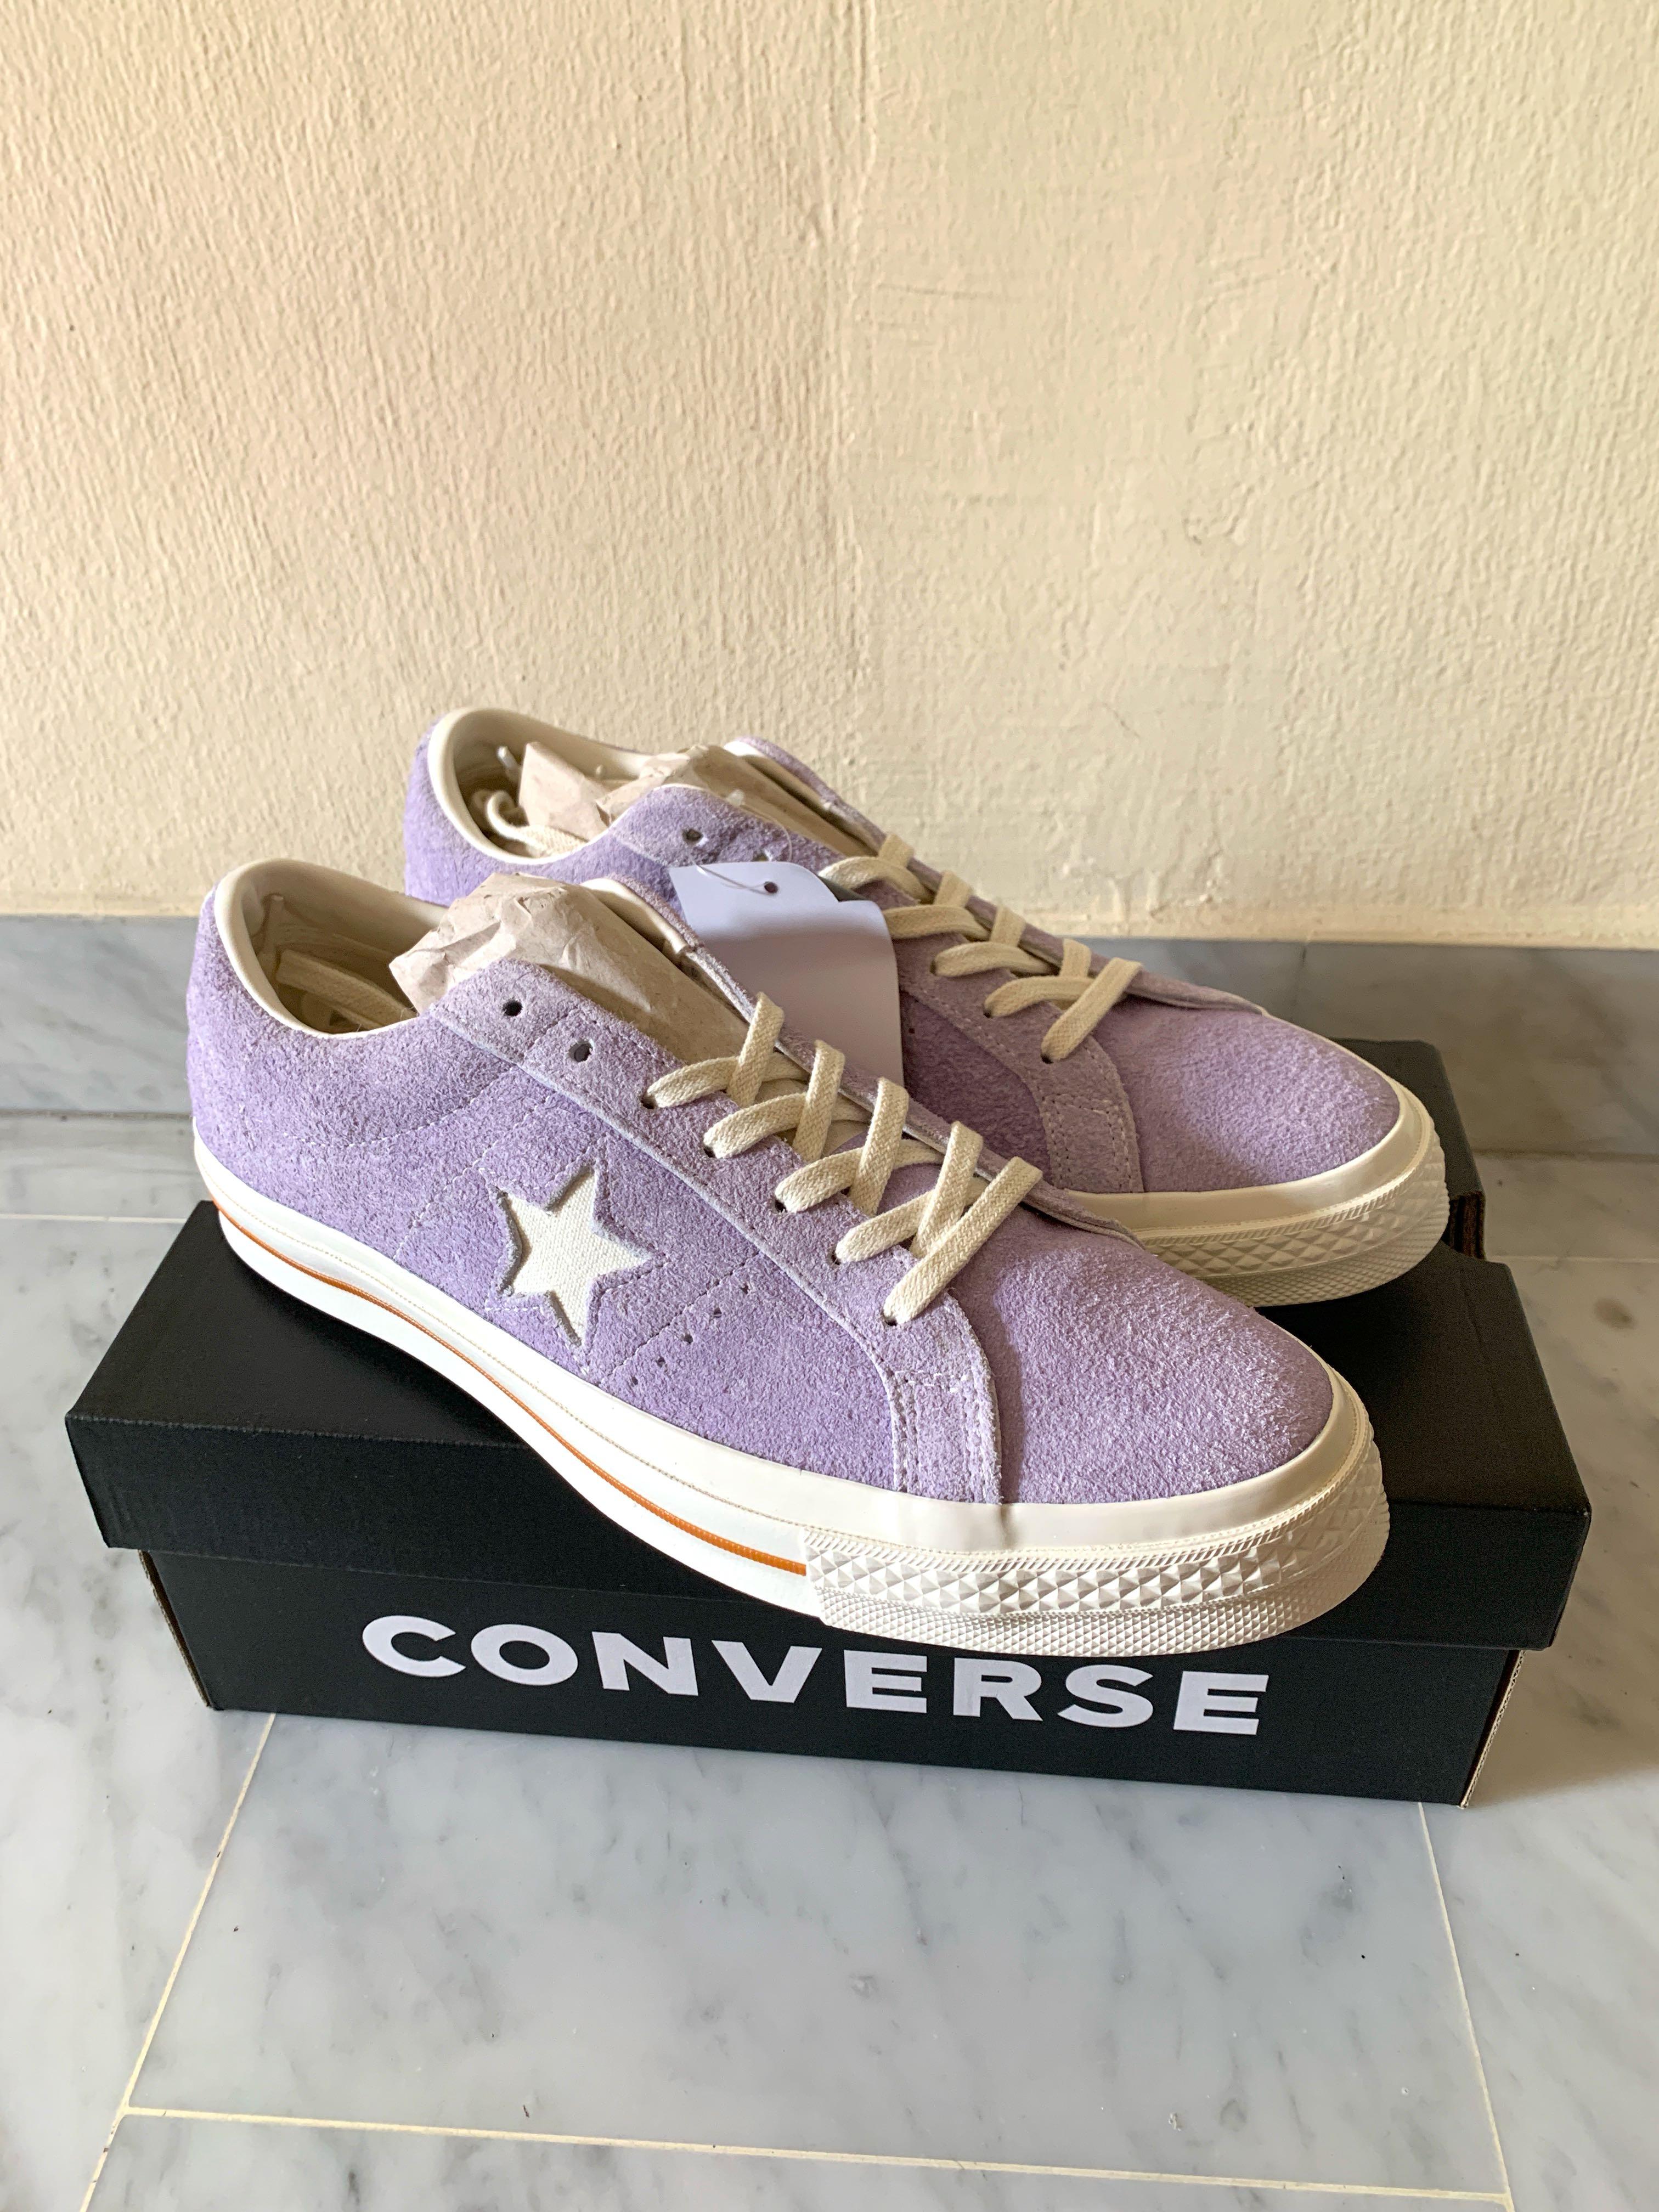 converse one star purple suede